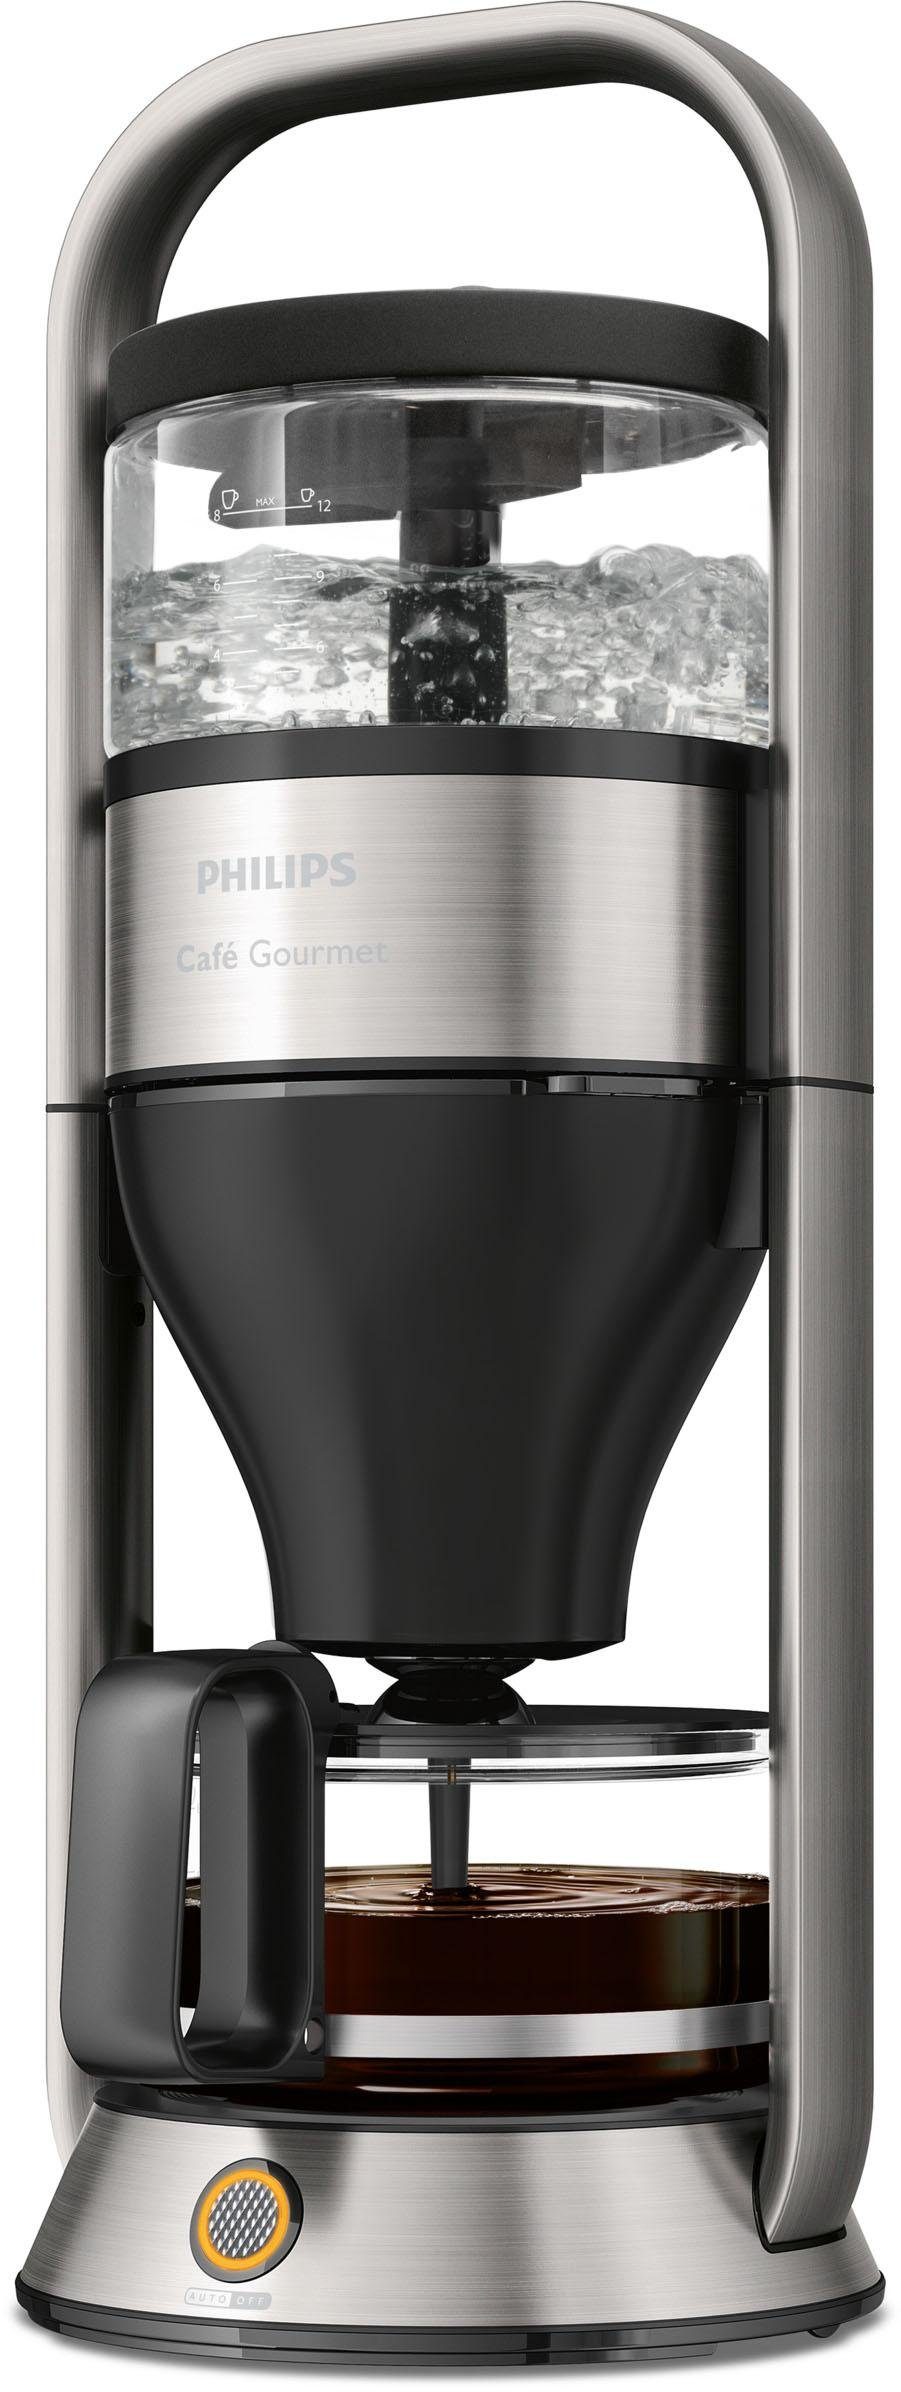 Philips Filterkaffeemaschine HD5413/00 Café Gourmet, 1l Kaffeekanne, 1x4  online kaufen | OTTO